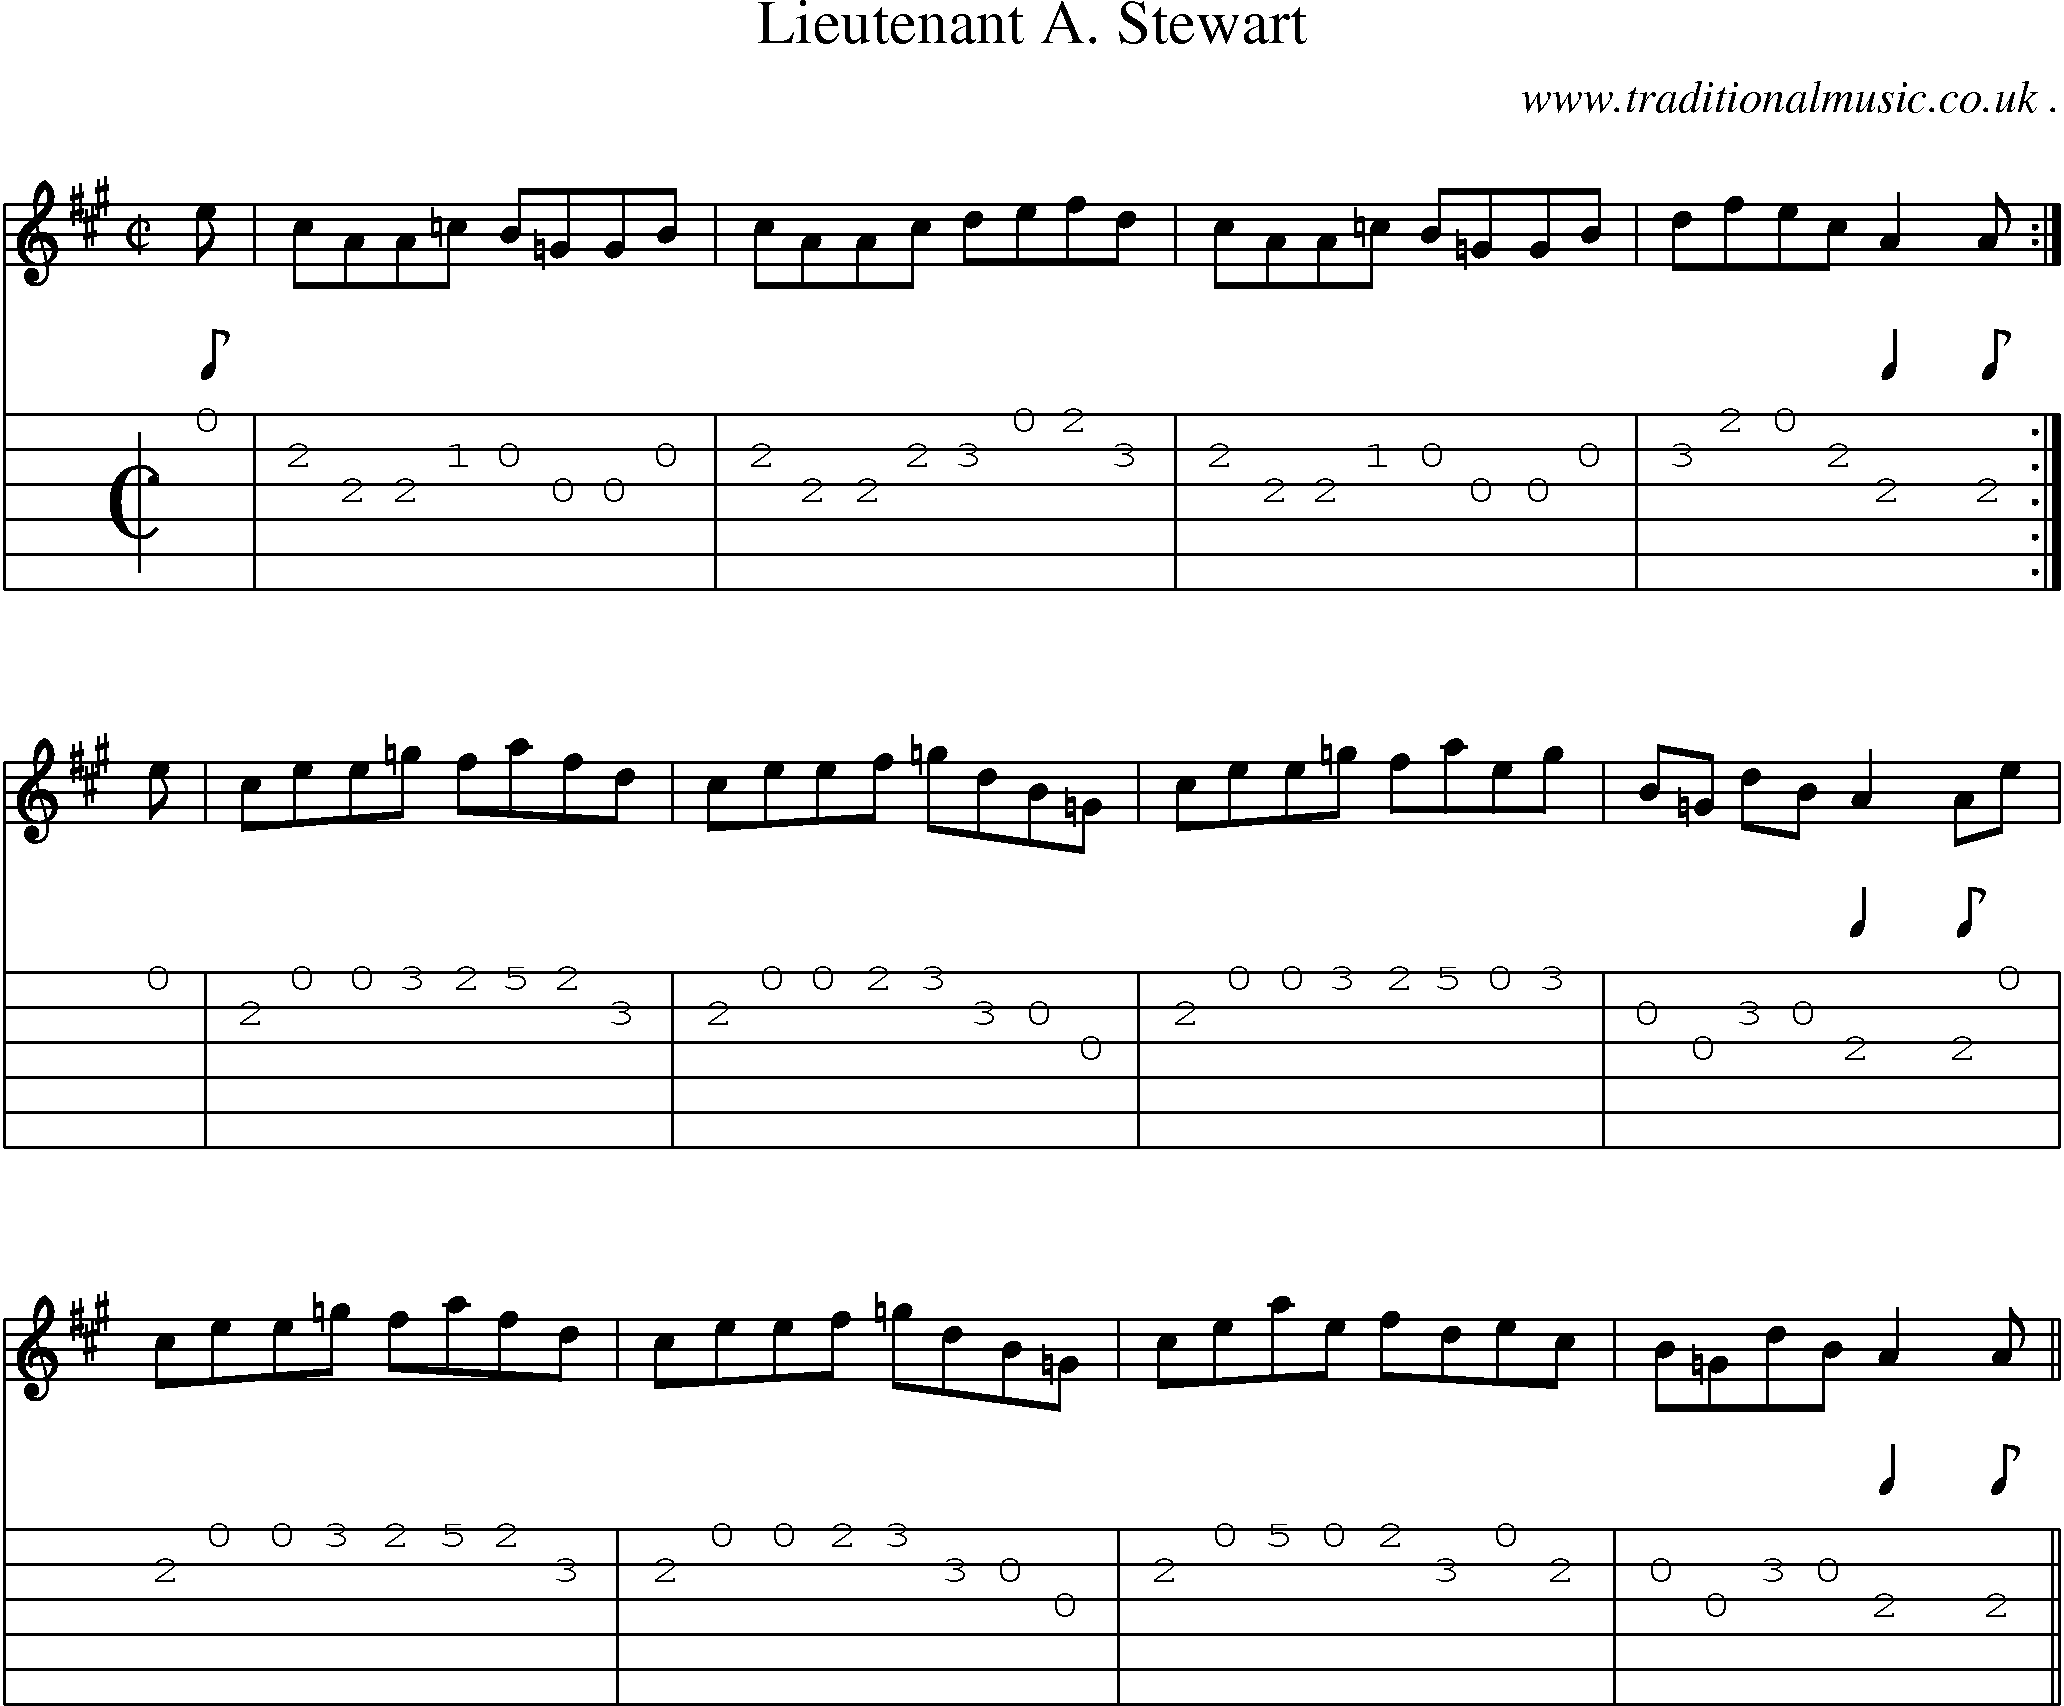 Sheet-music  score, Chords and Guitar Tabs for Lieutenant A Stewart